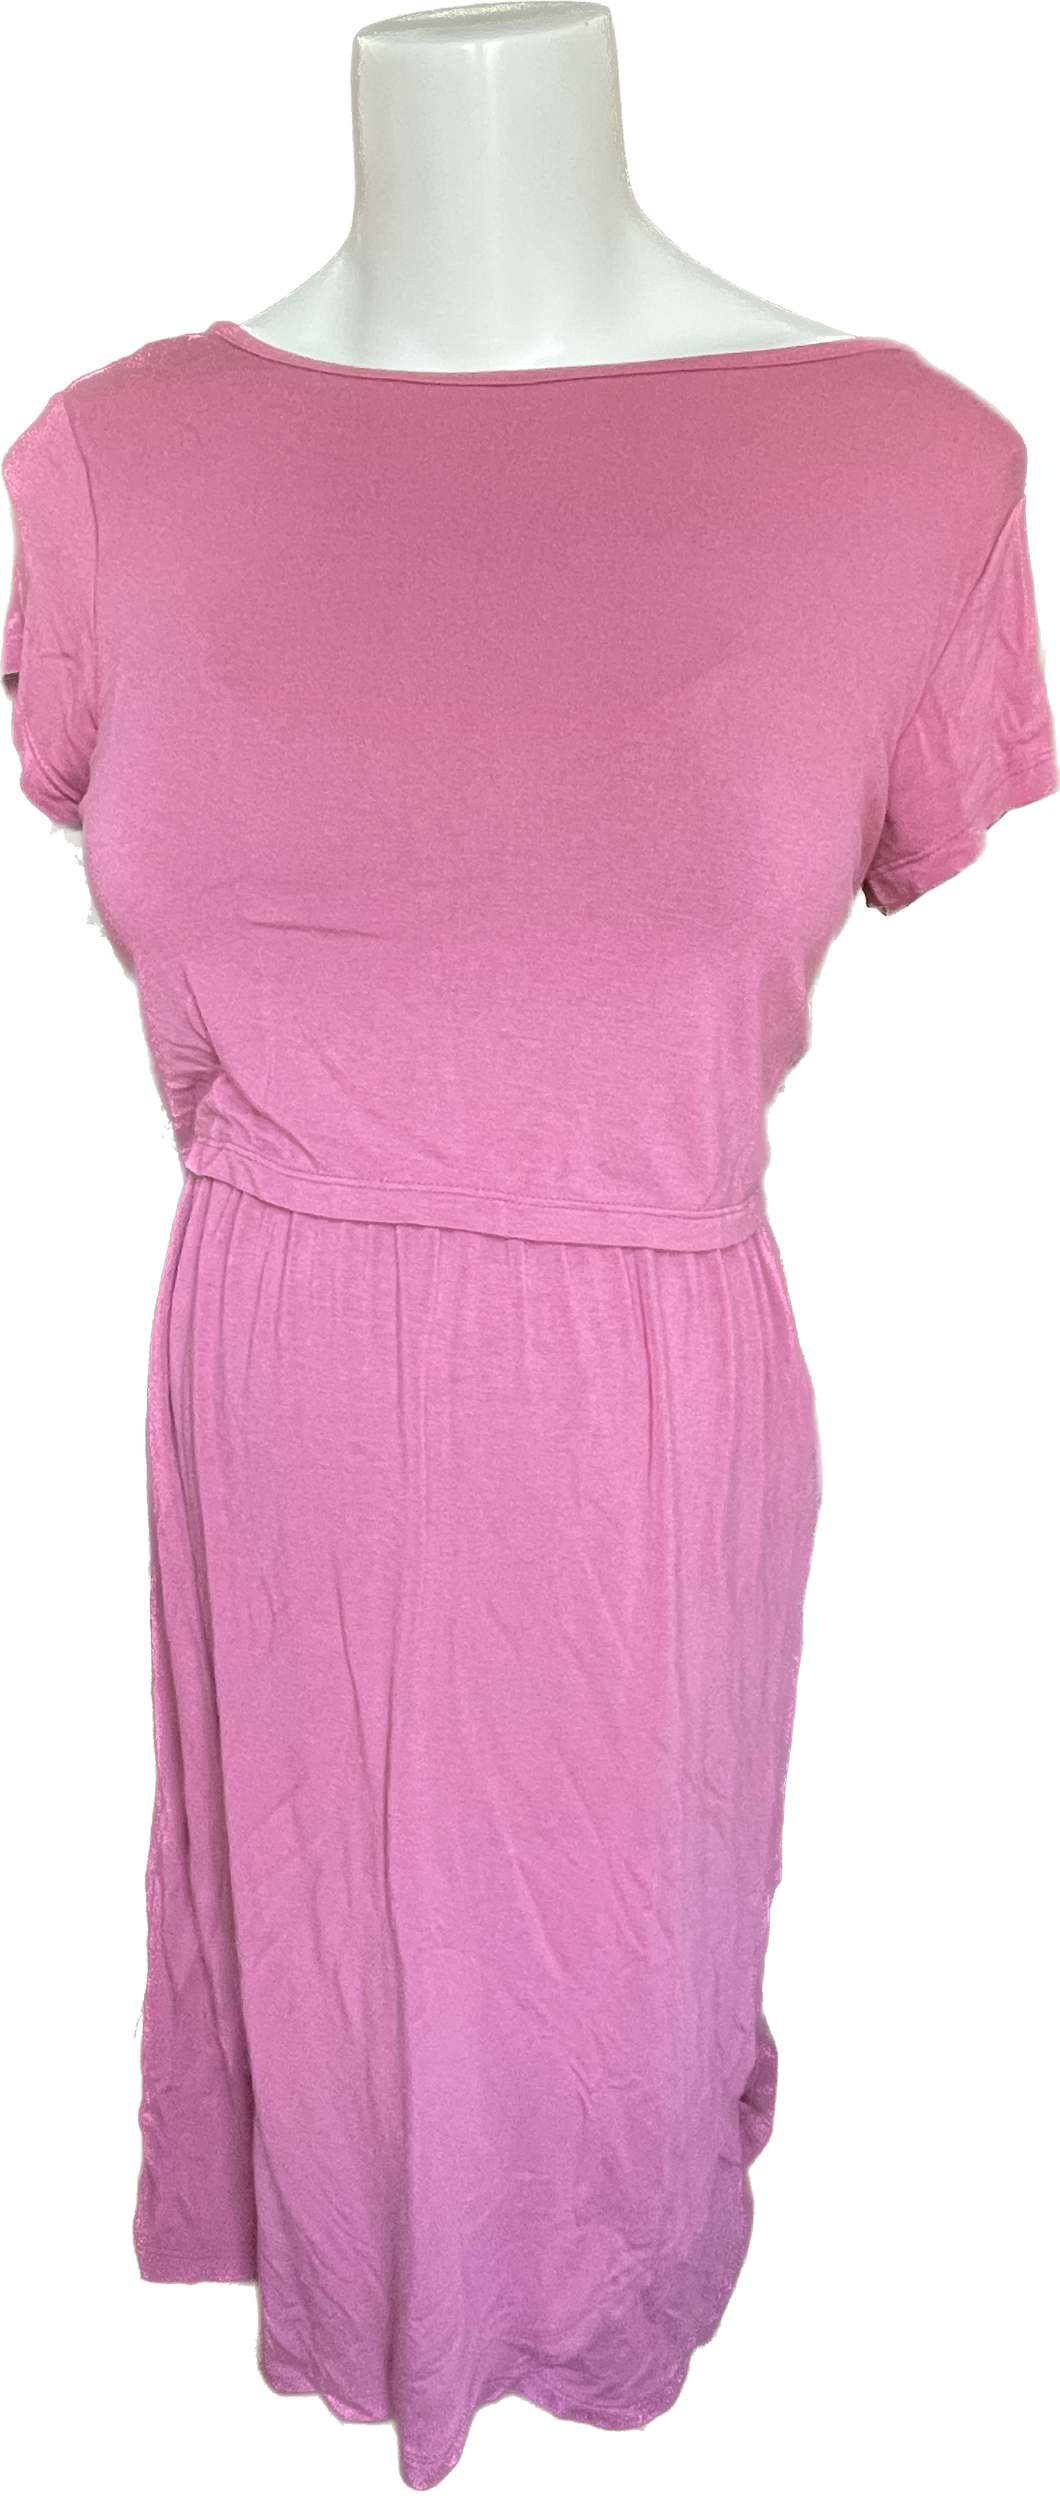 S Gap Maternity Feeding Dress in Pink